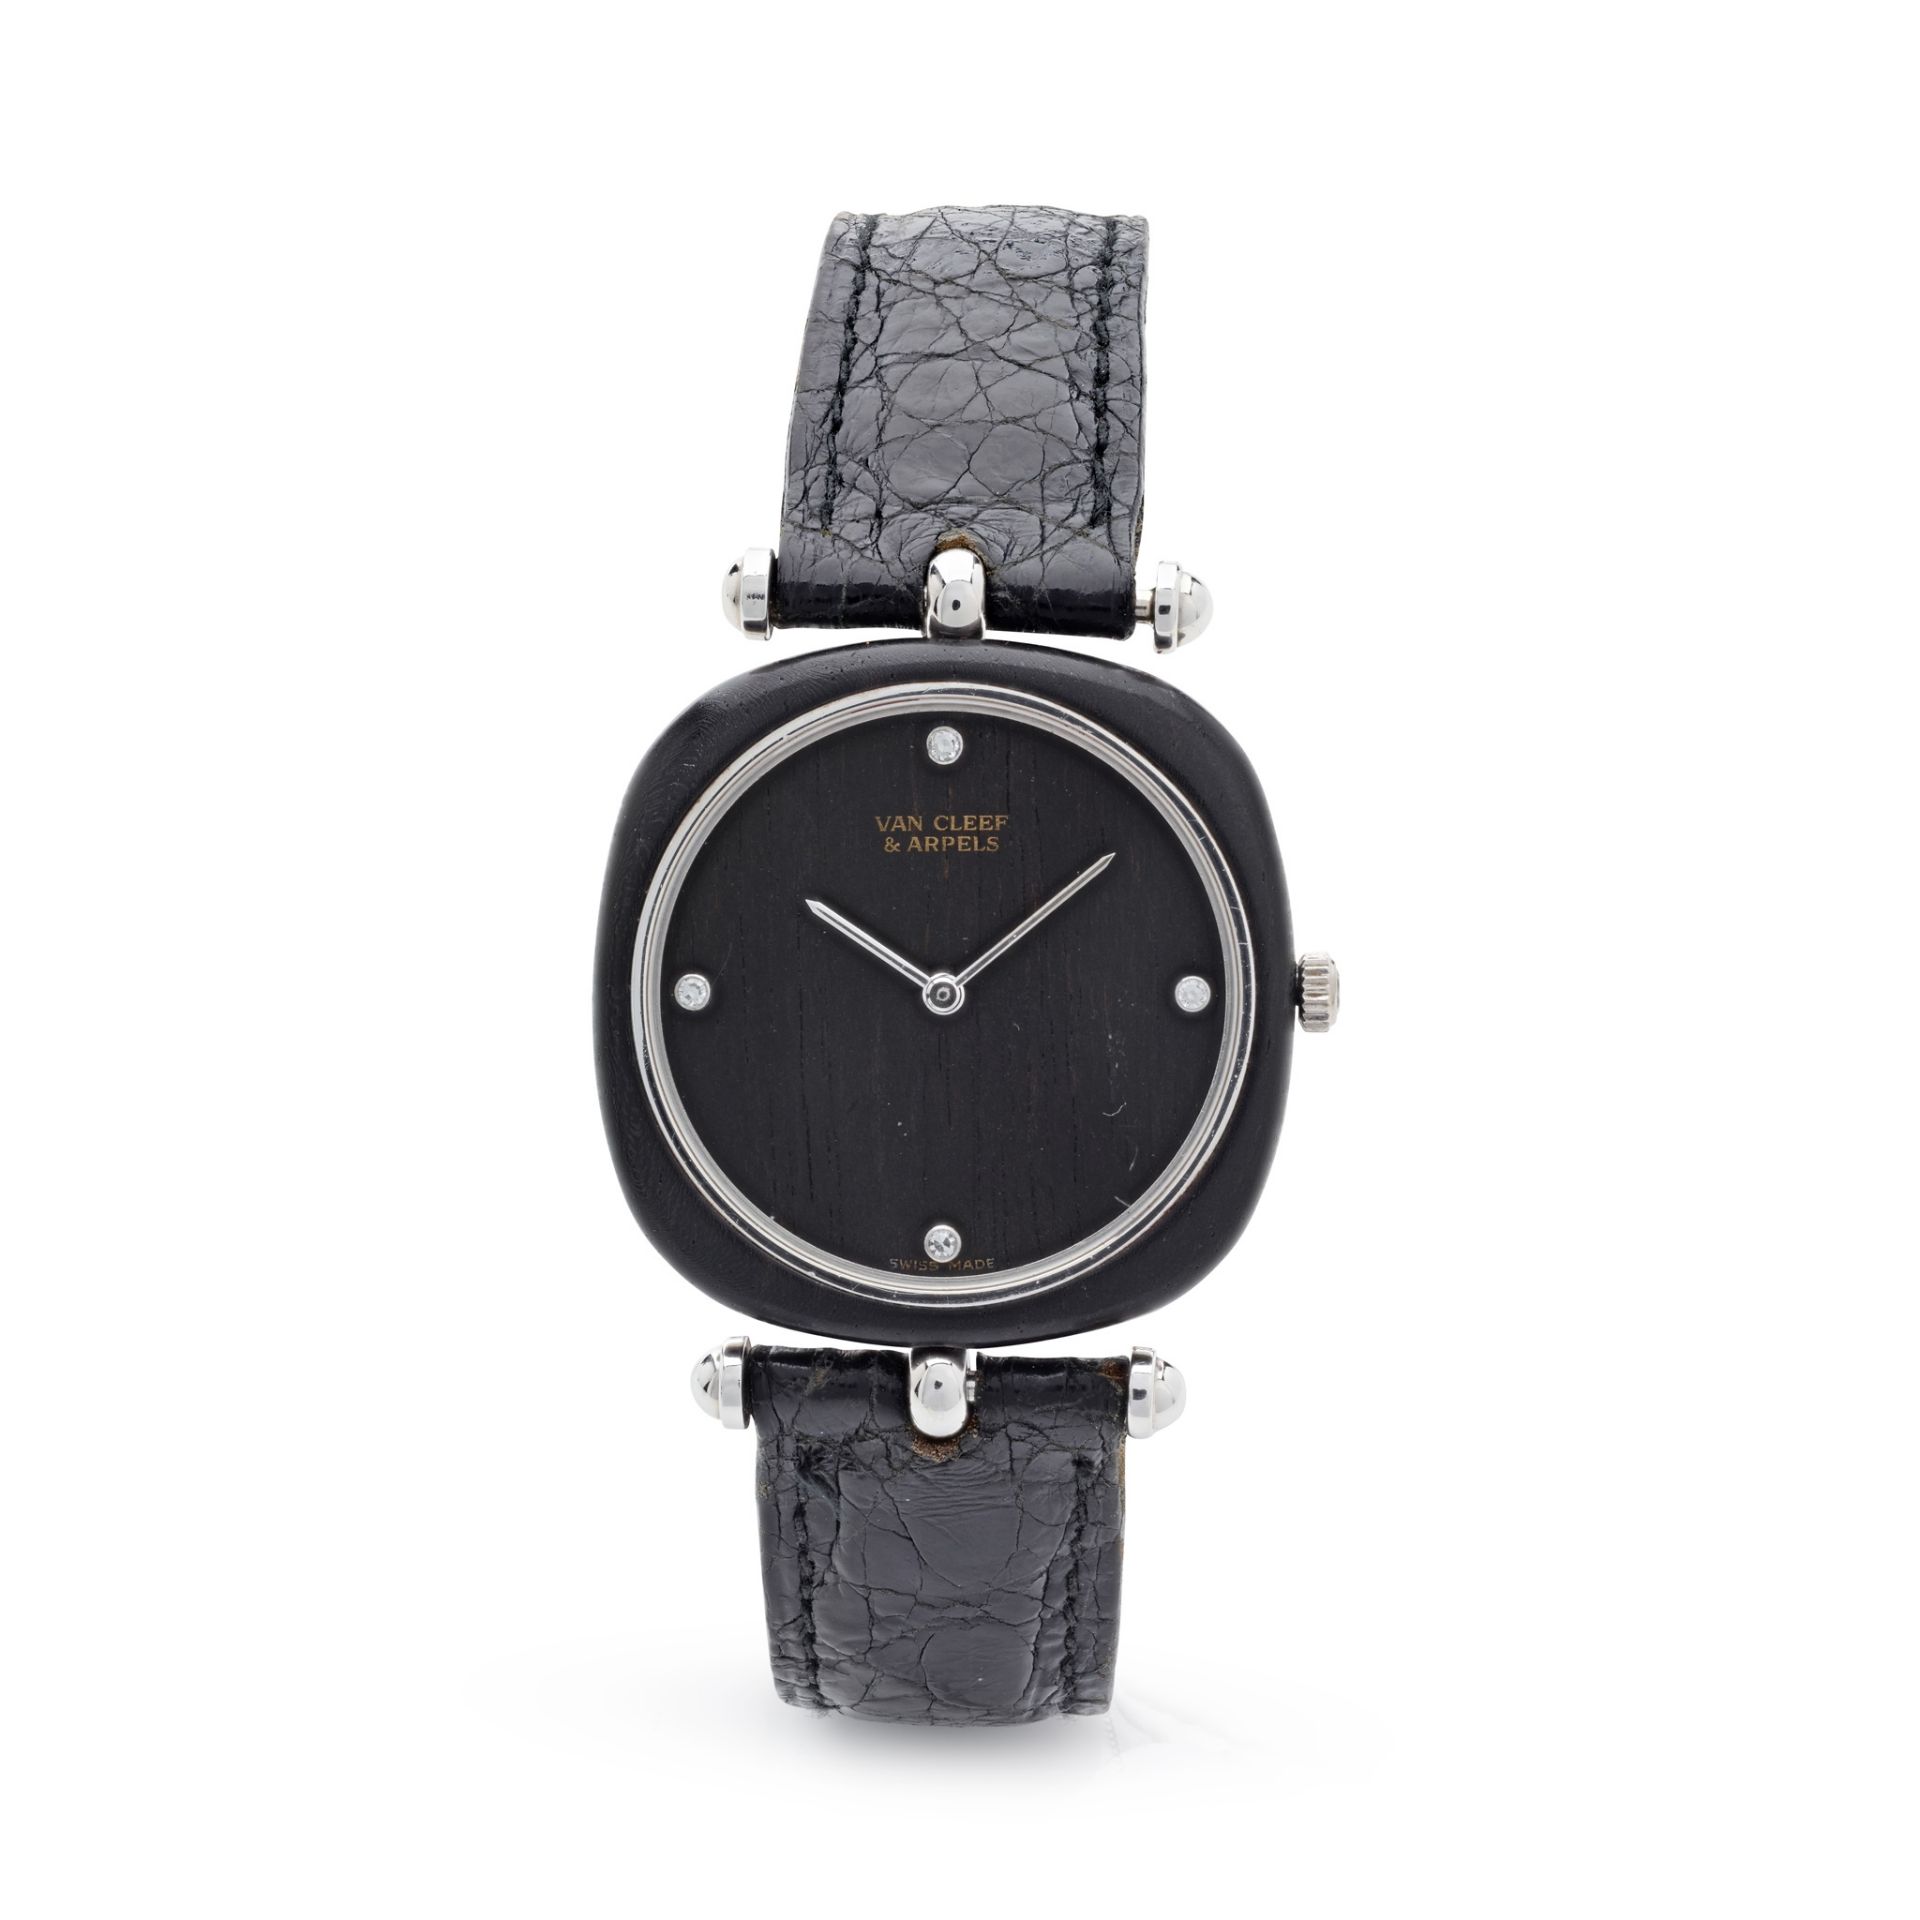 Van Cleef & Arpels: a diamond set wrist watch